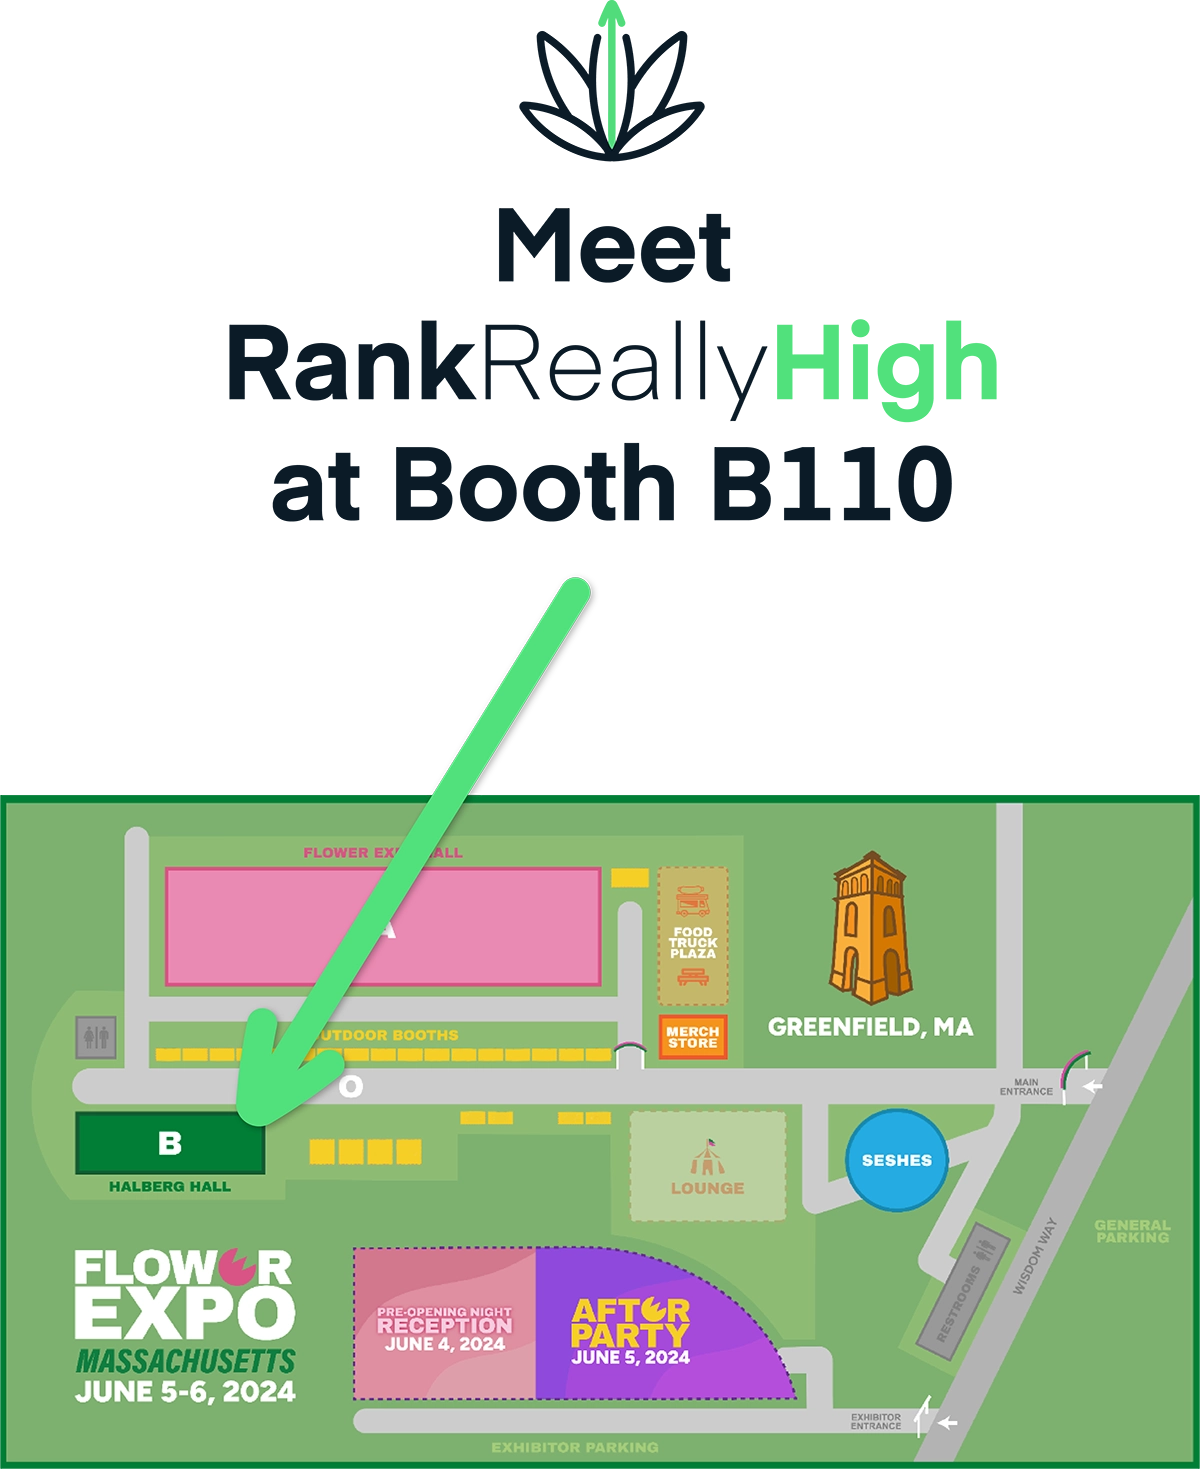 Meet Rank Really High at Flower Expo at Booth B110